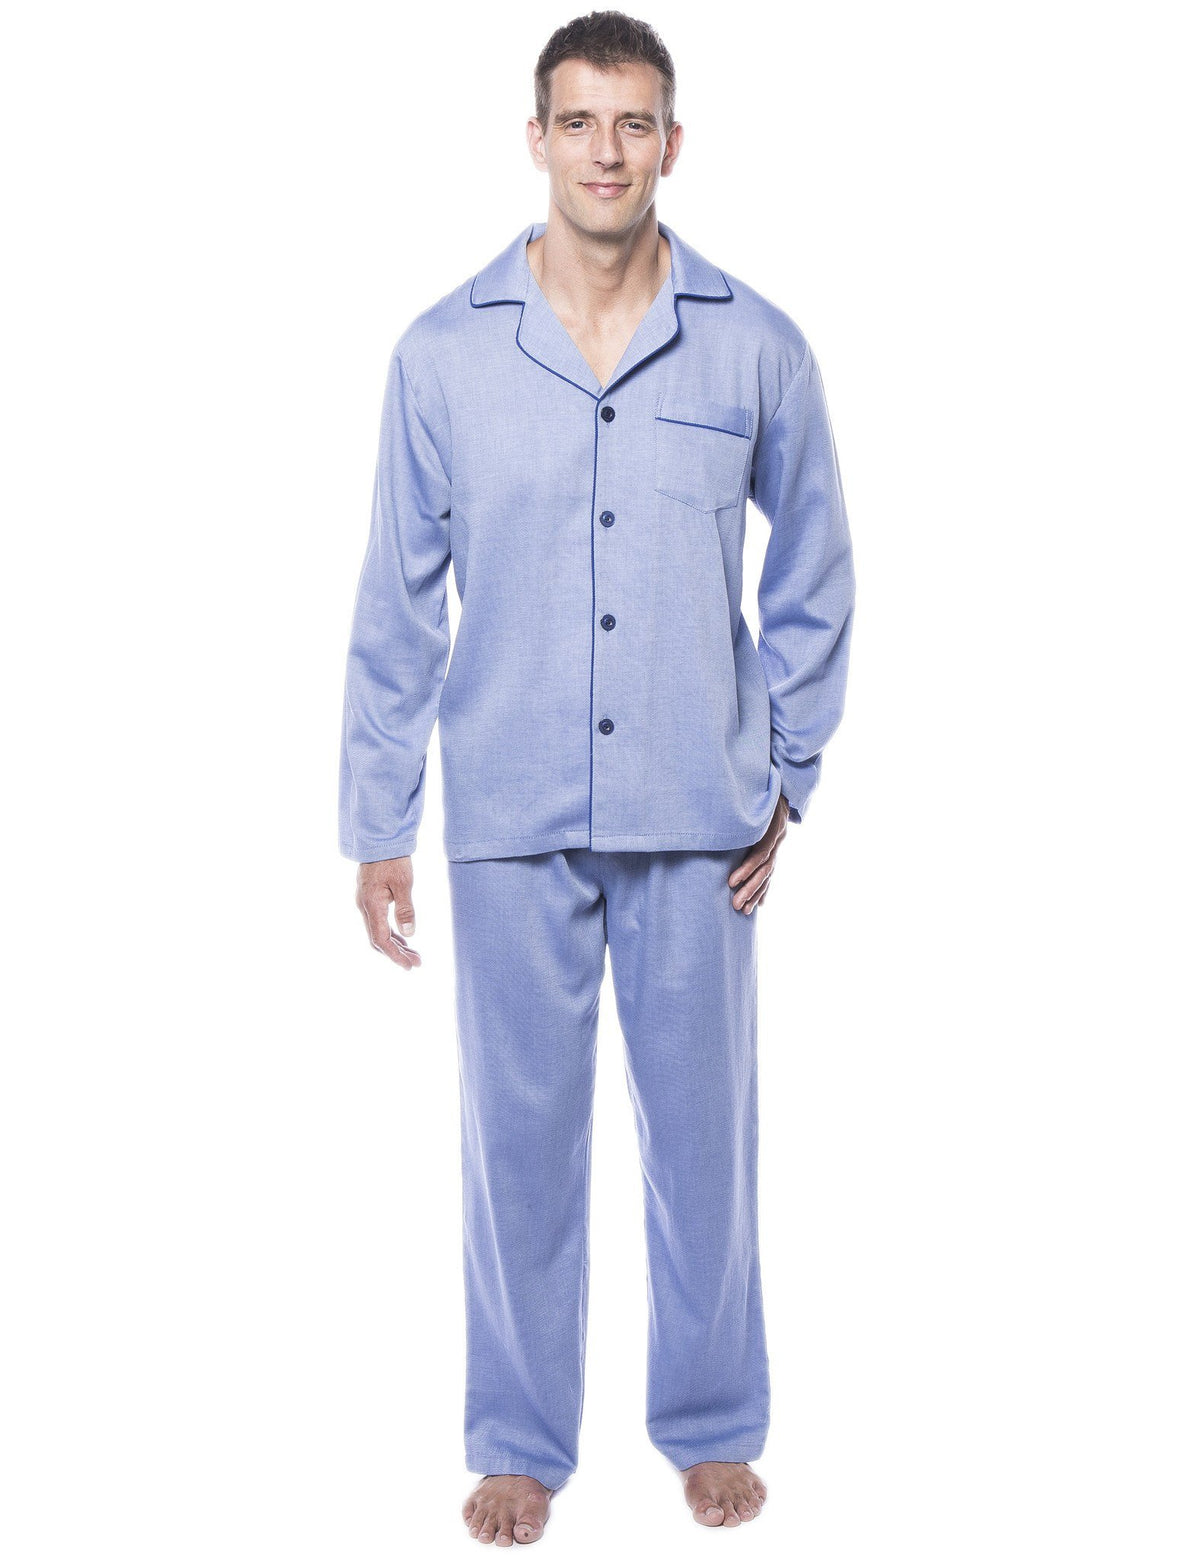 Men's 100% Woven Cotton Pajama Sleepwear Set - Blue Twill